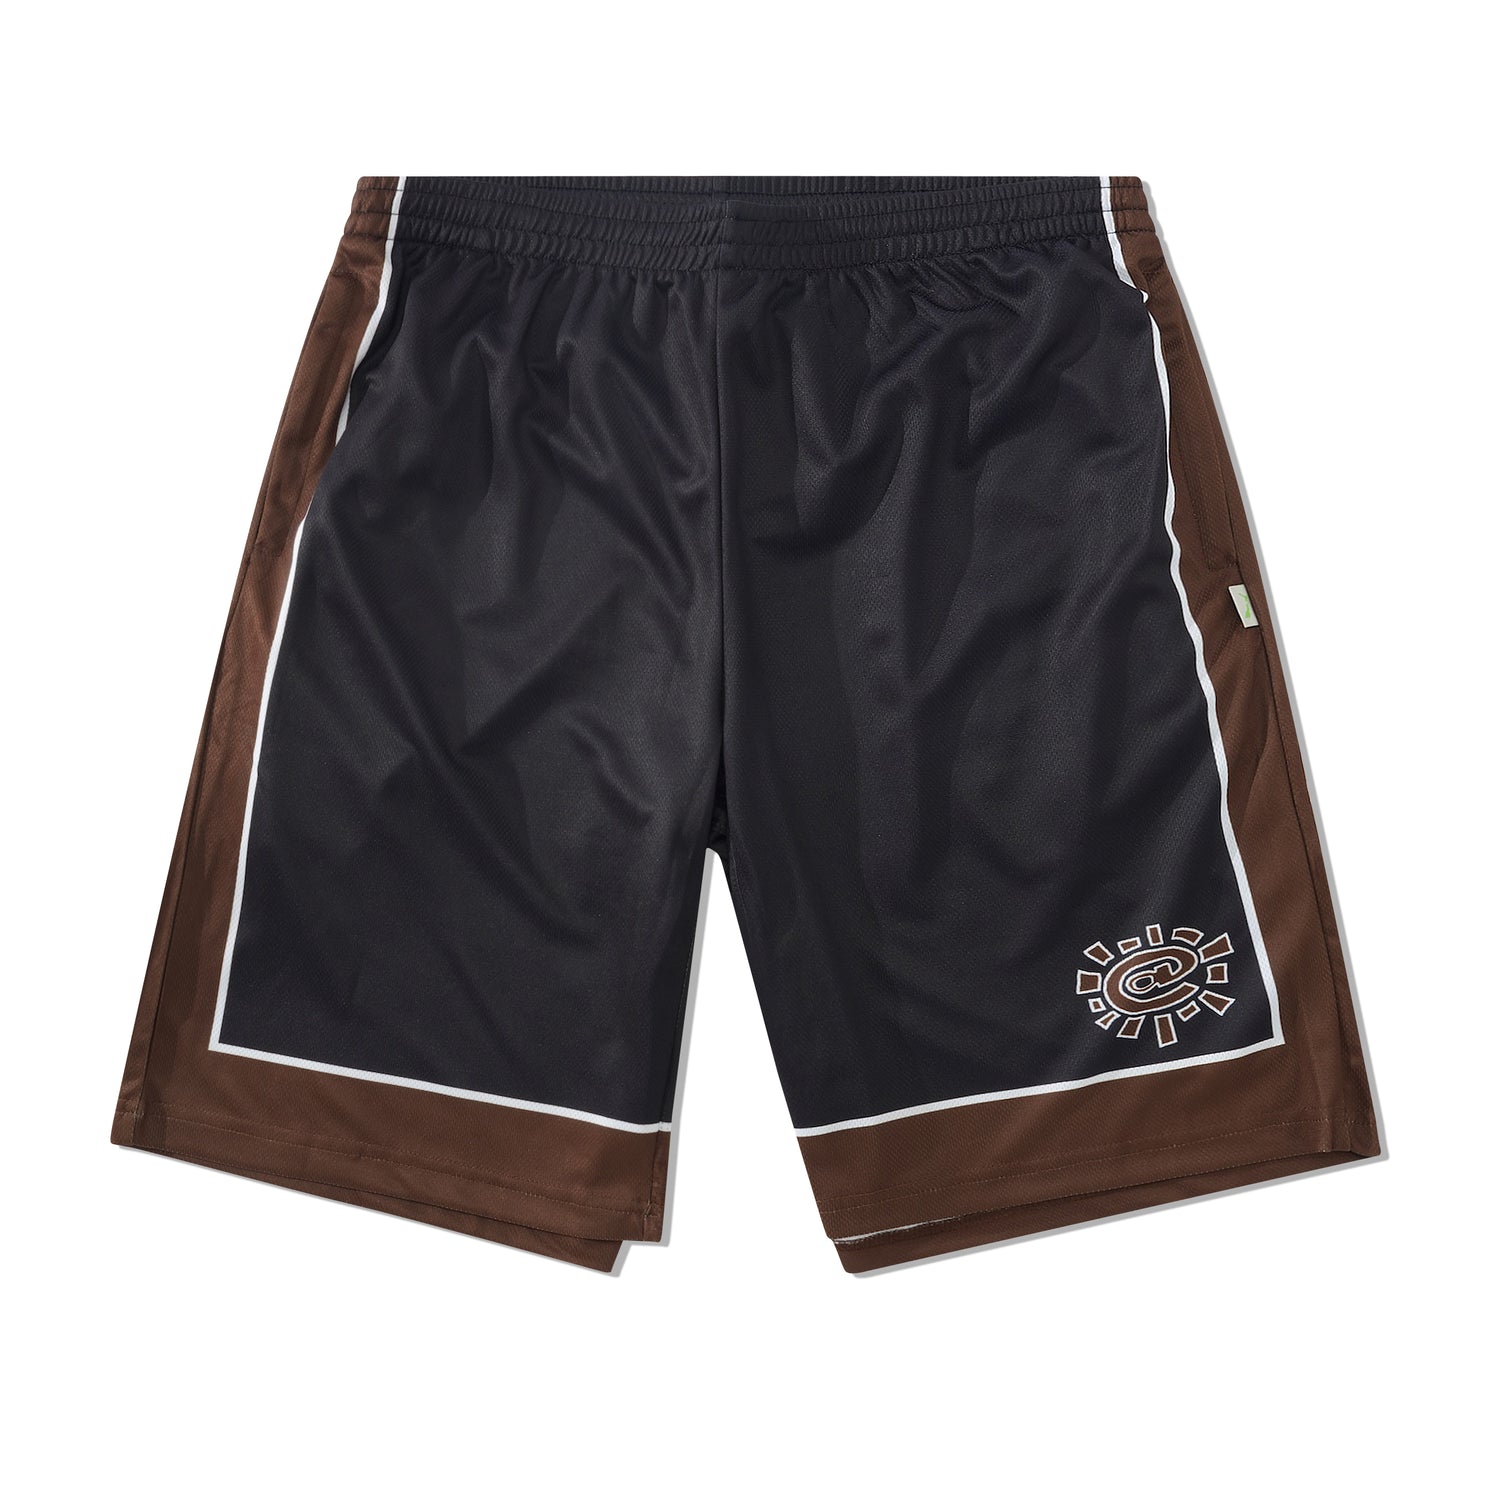 Court Shorts, Black / Brown